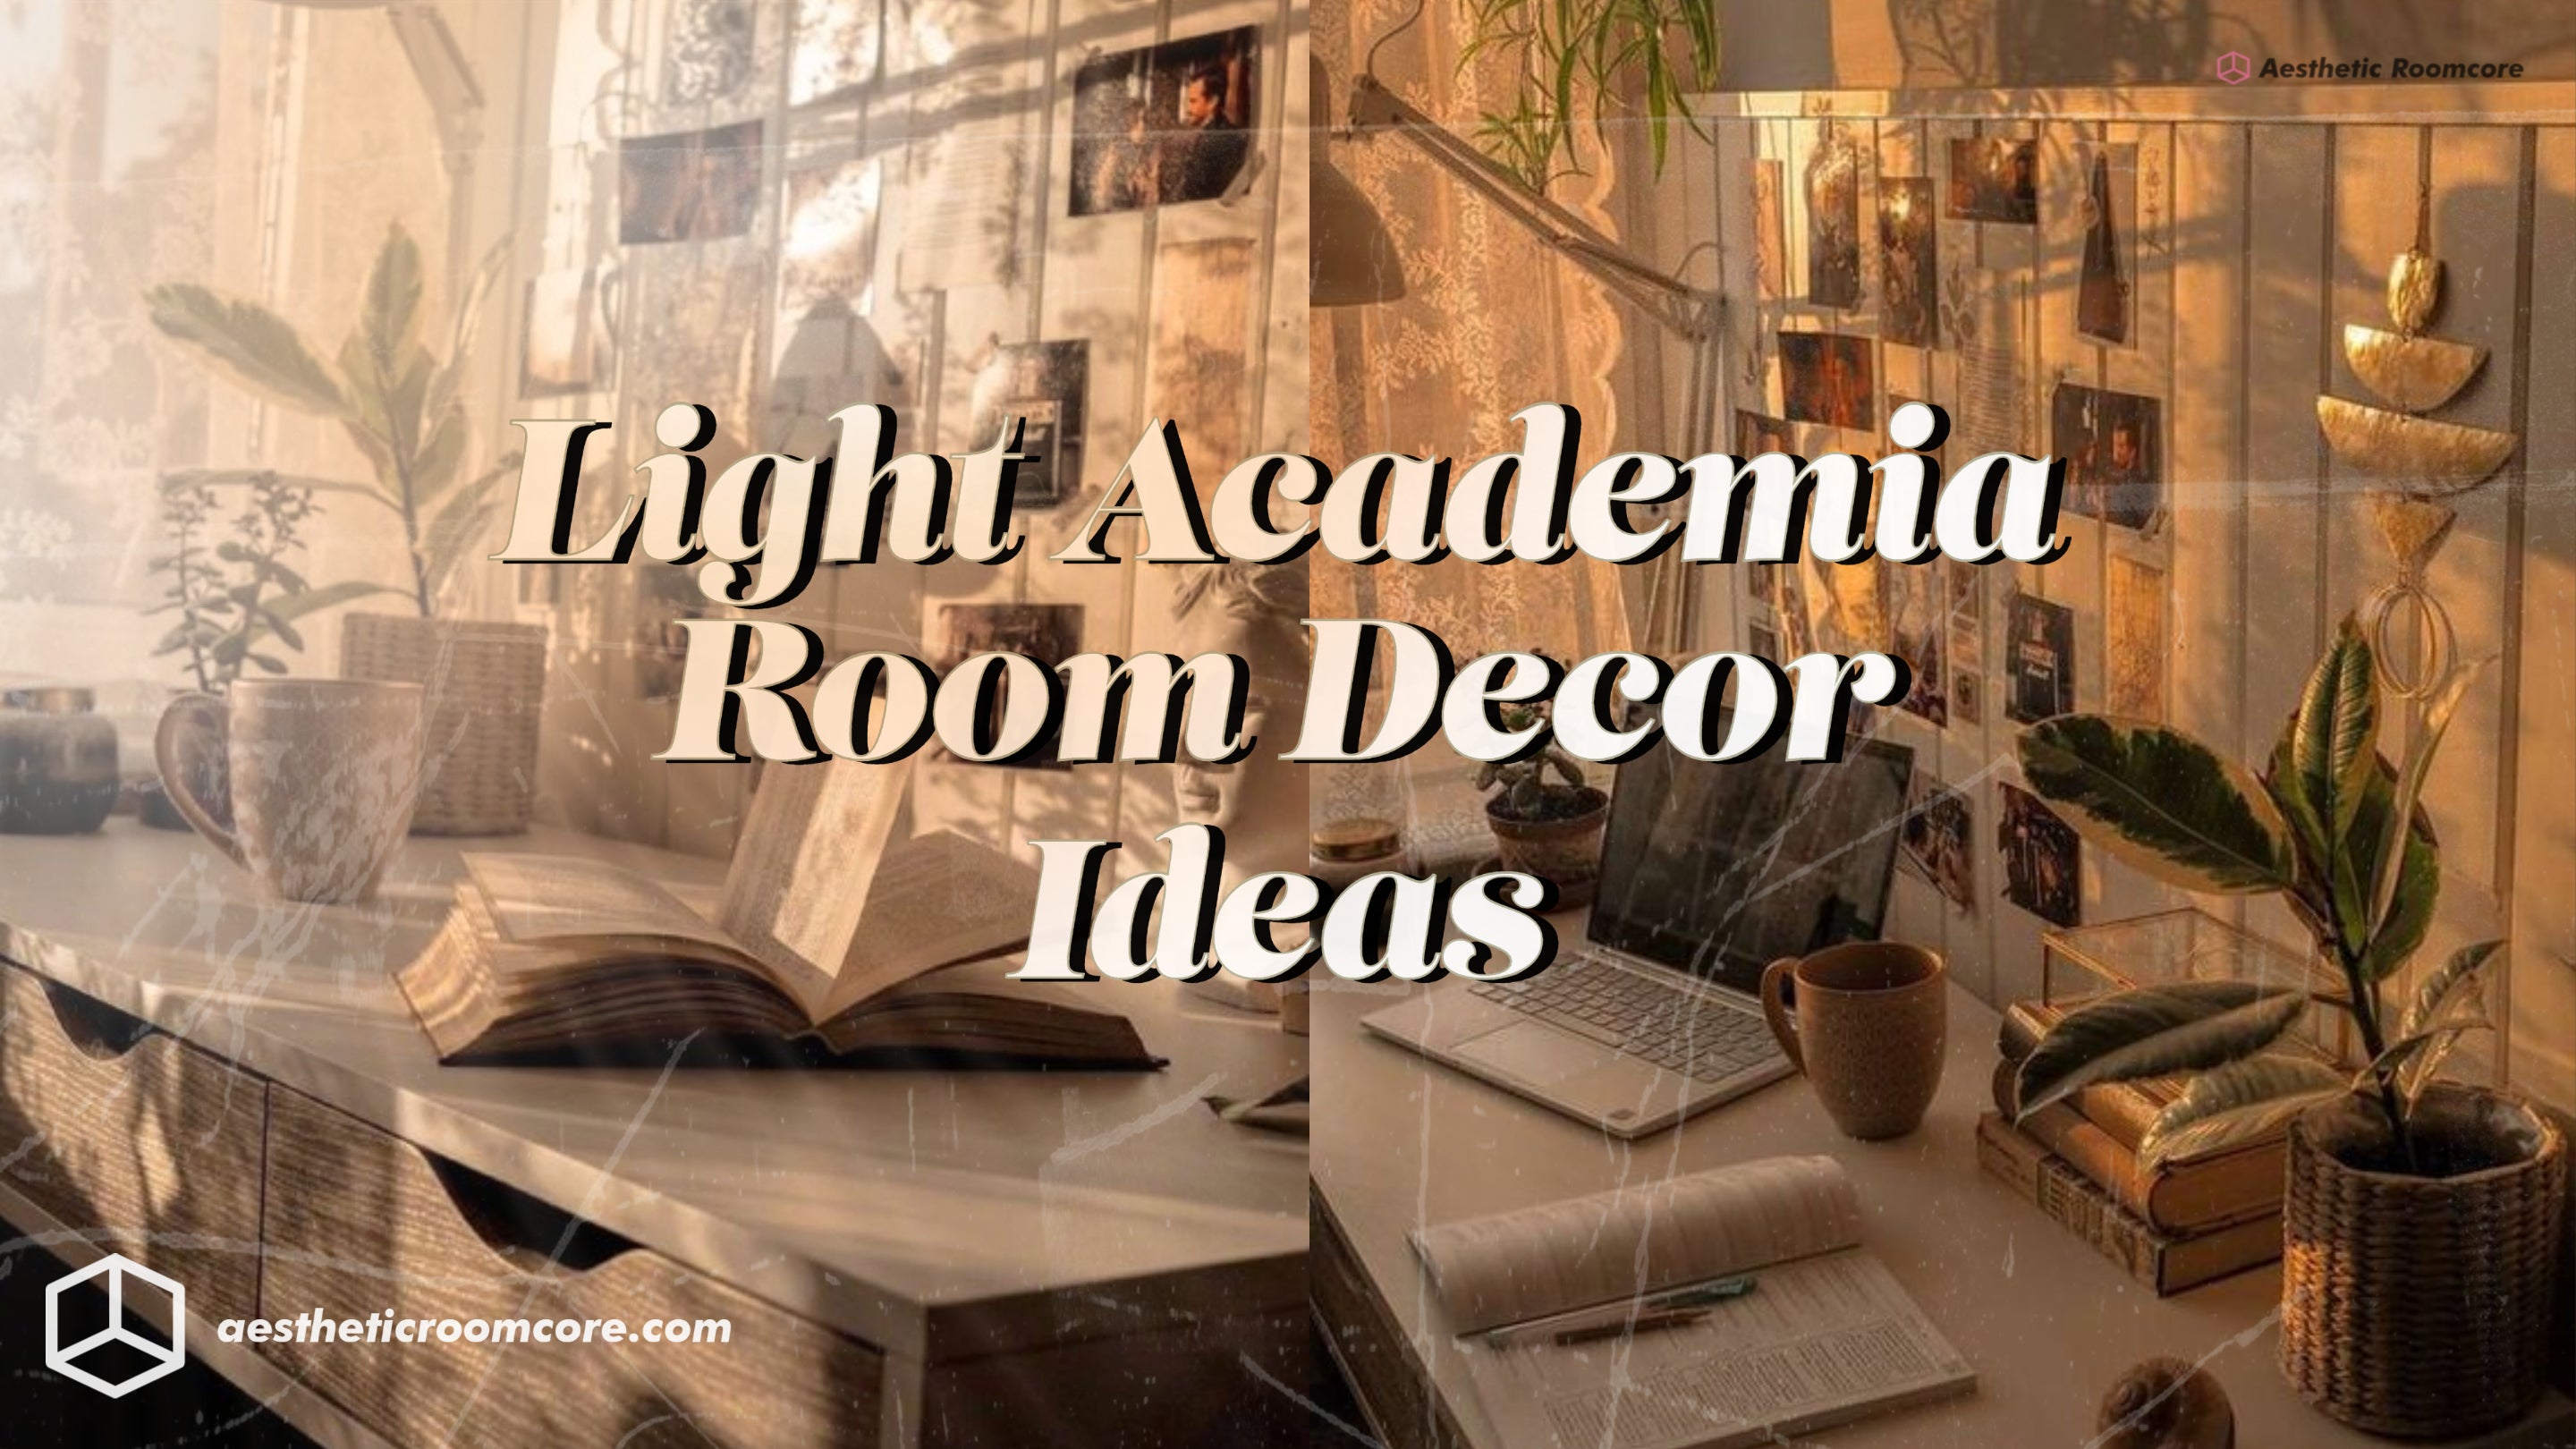 How To Create The Perfect Moody Dark Academia Room